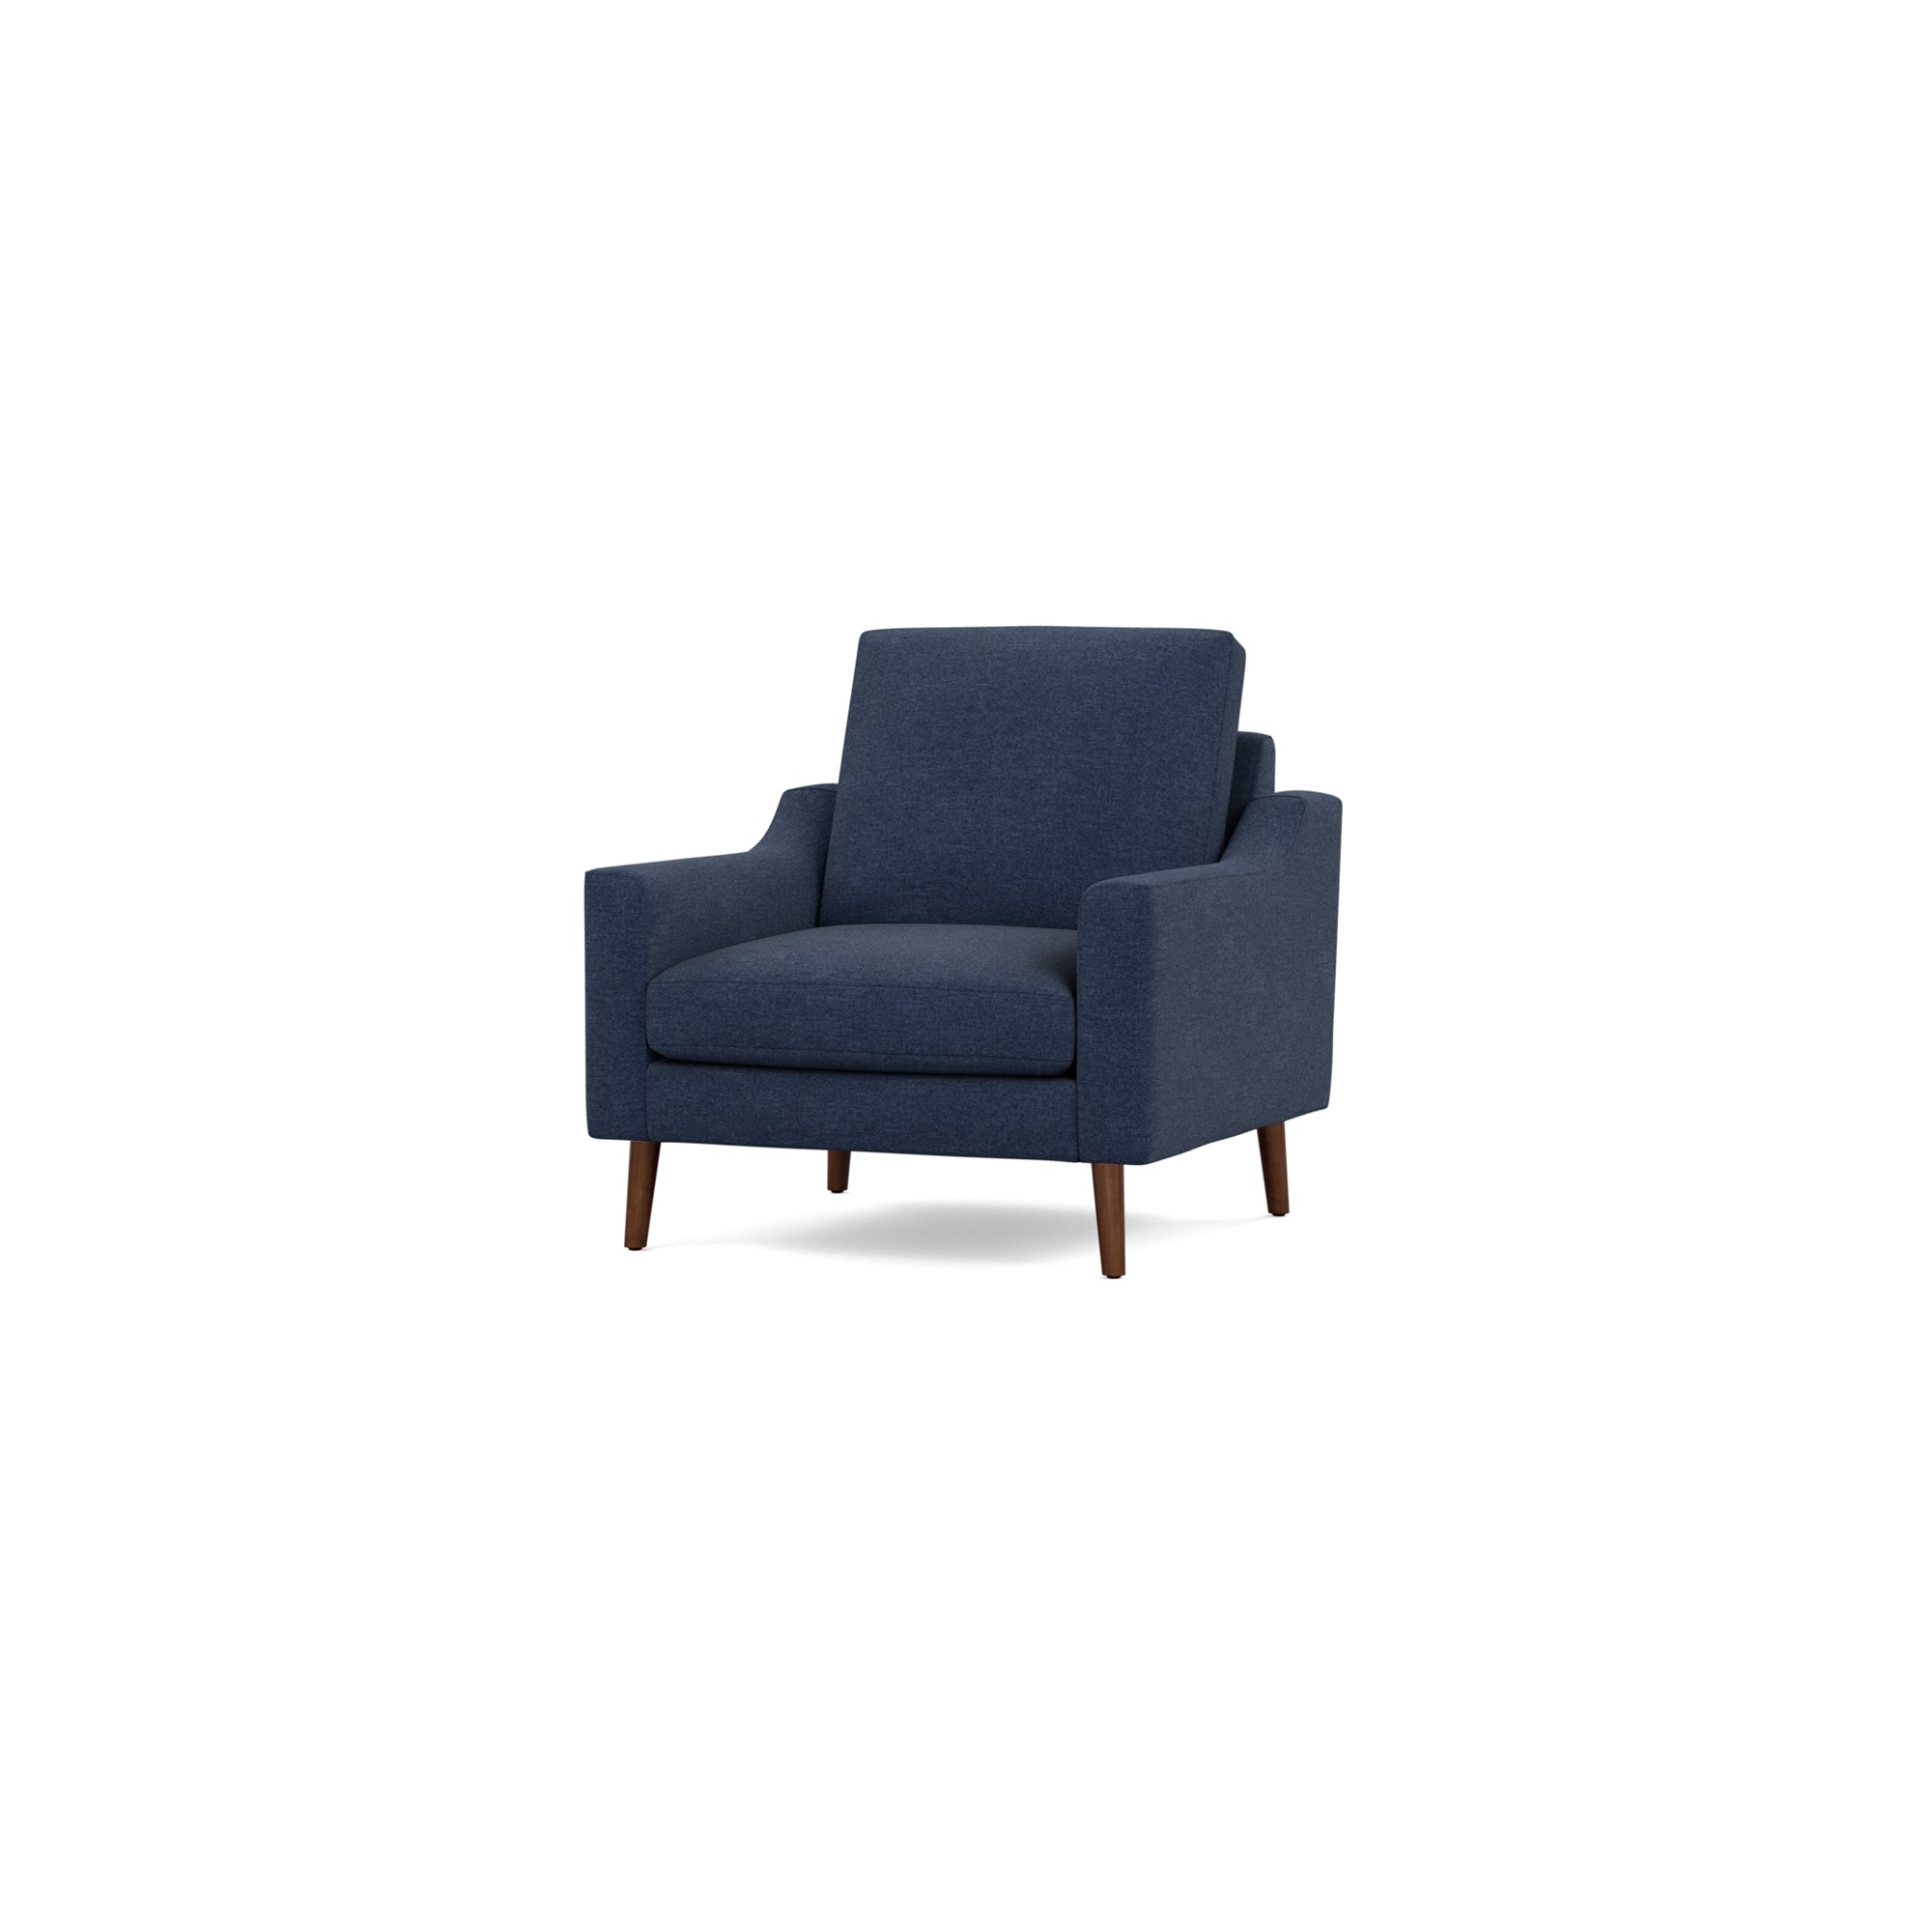 Nomad Armchair in Navy Blue, Leg Finish: WalnutLegs - Image 0